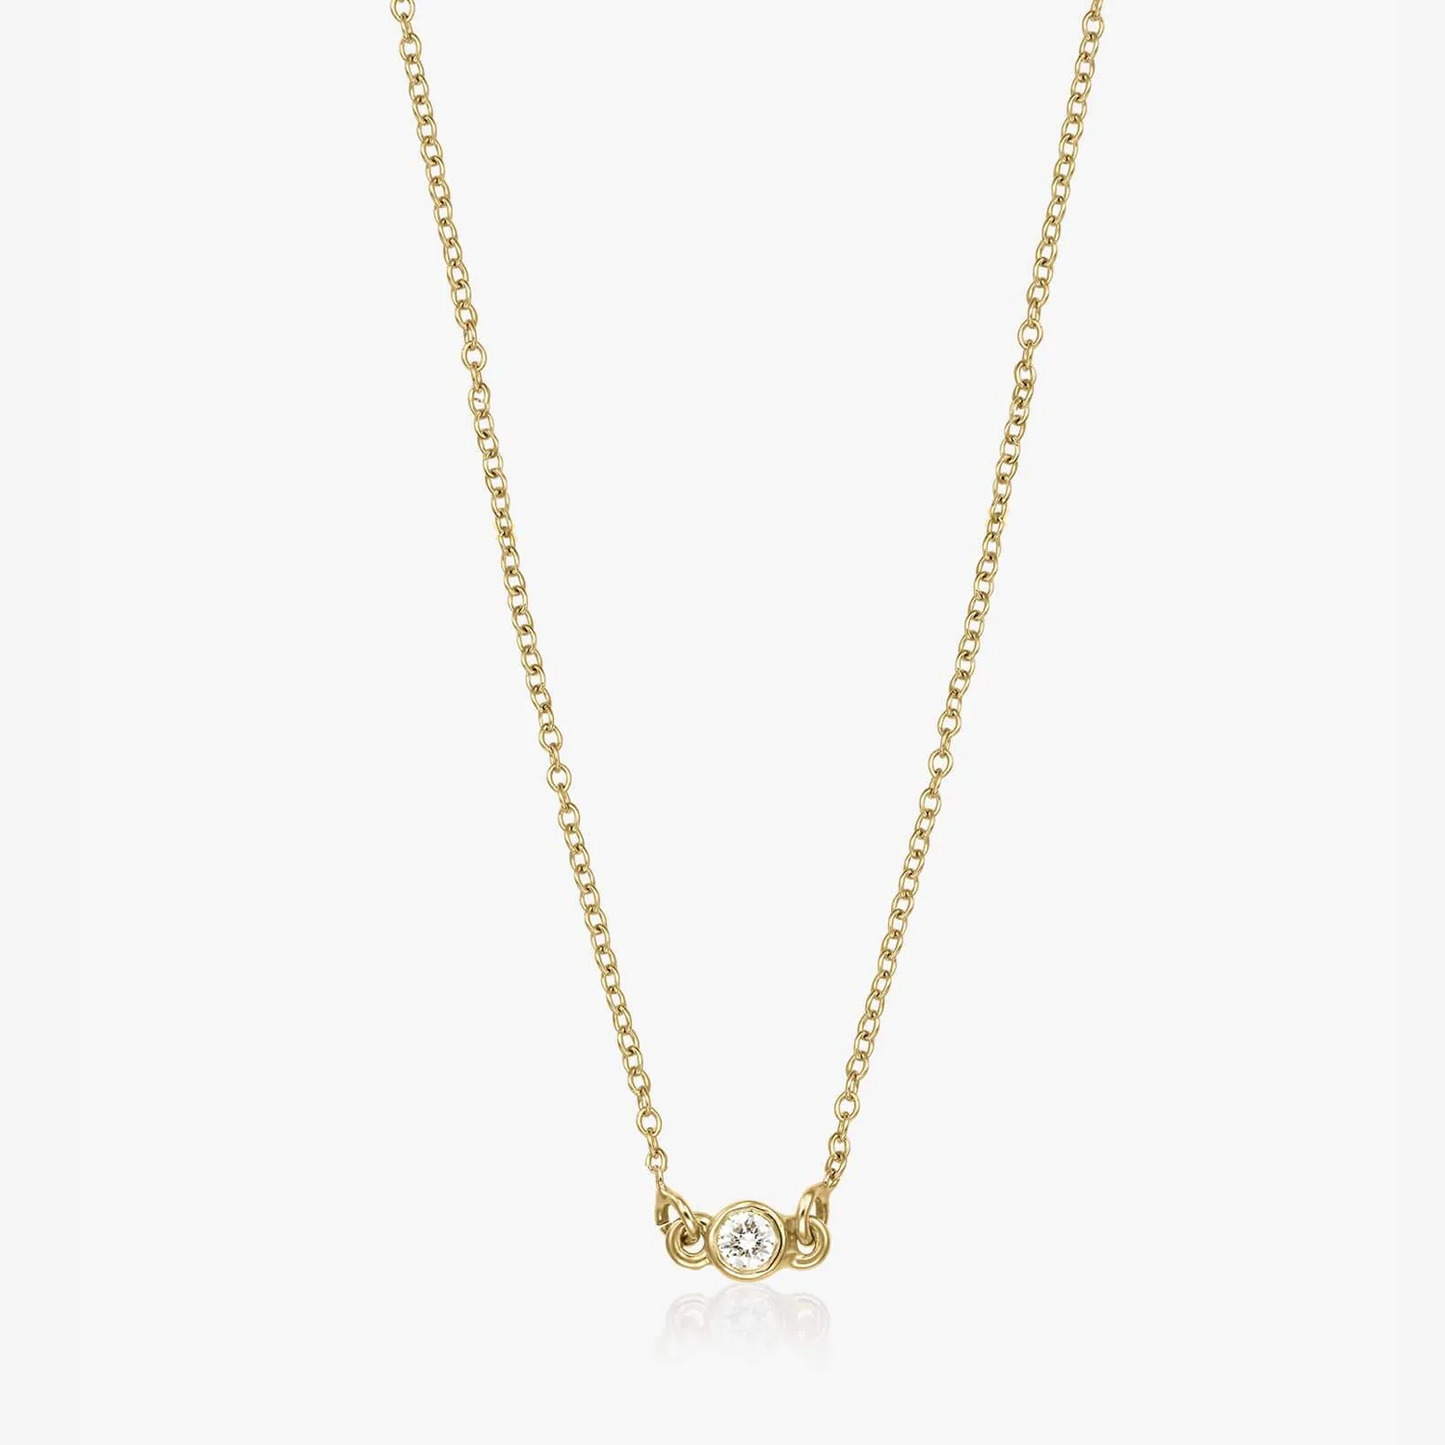 Solo gold necklace - Diamonds